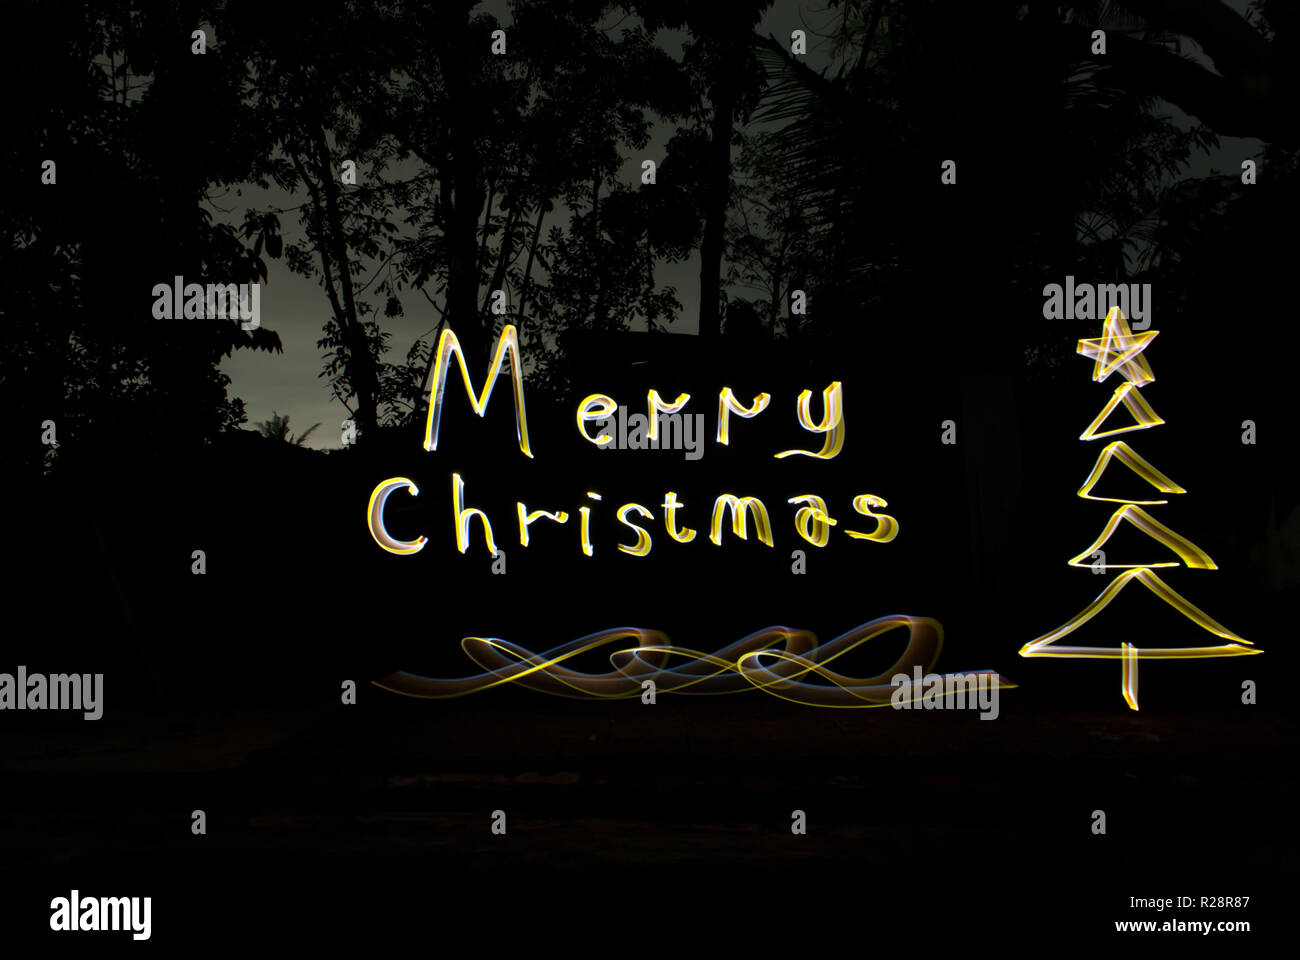 Luxury greetings merry Christmas. Hand writing with Light painting art work Stock Photo